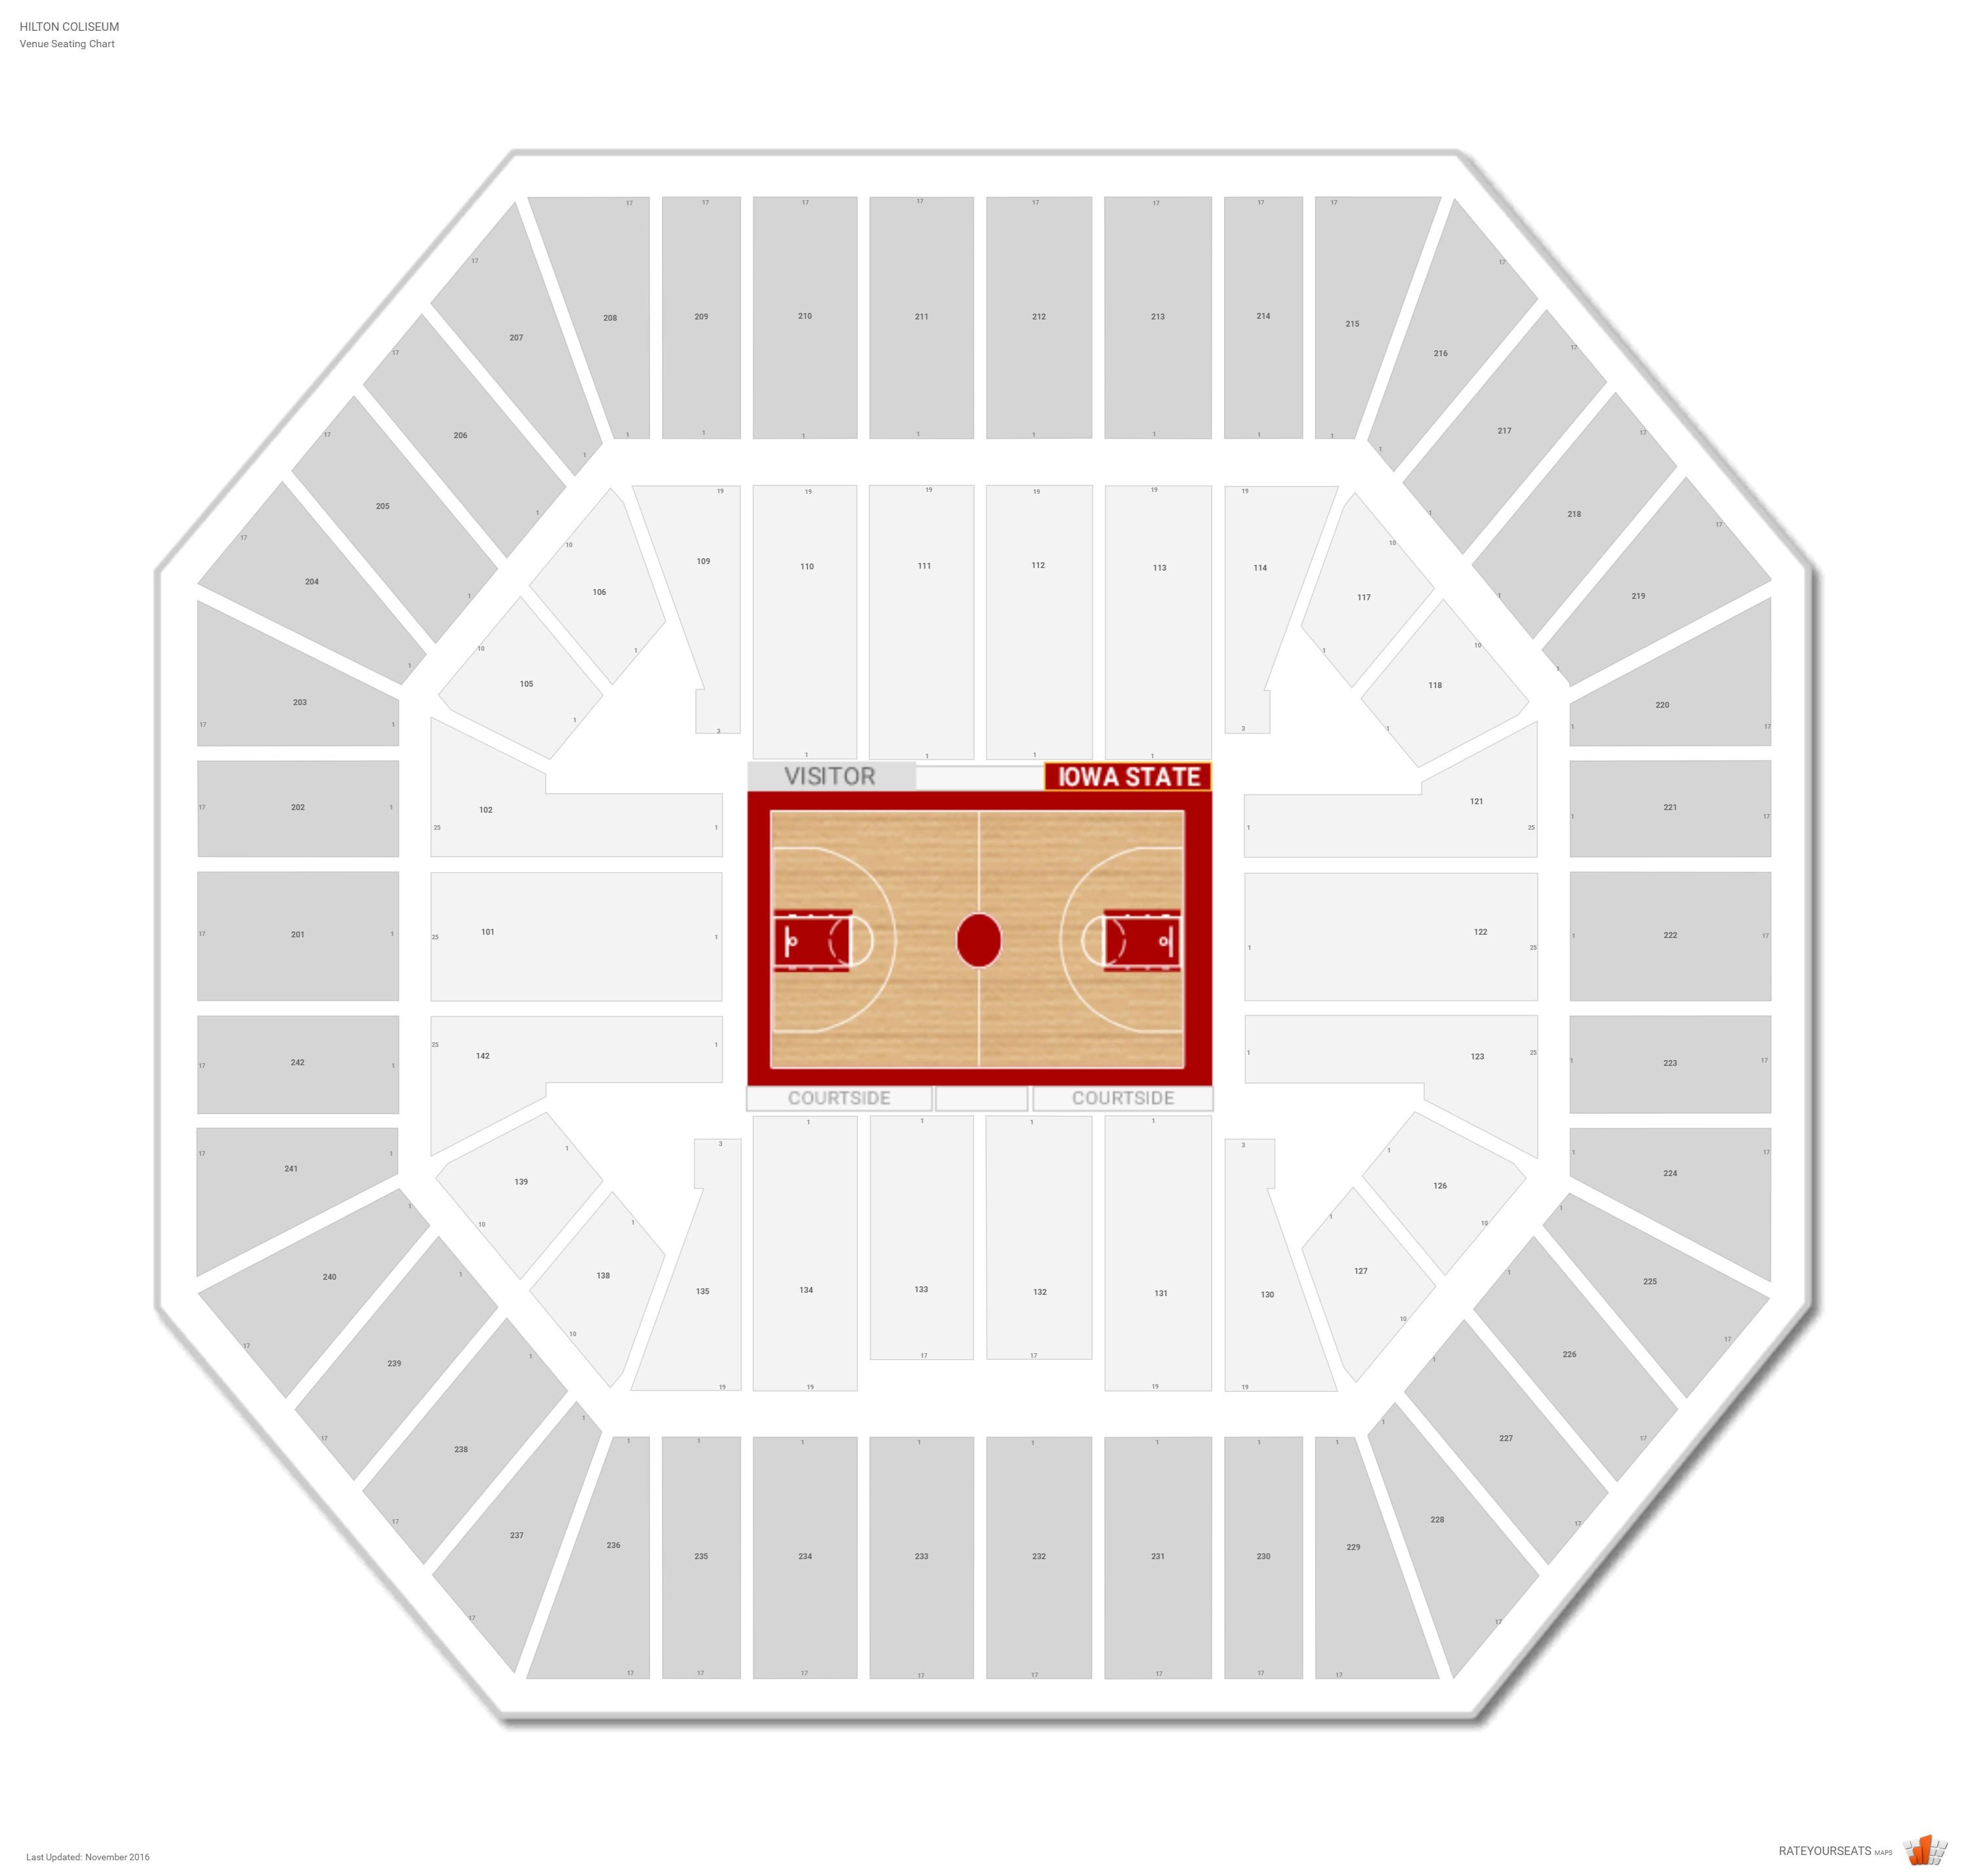 Hilton Coliseum Seating Chart Men S Basketball